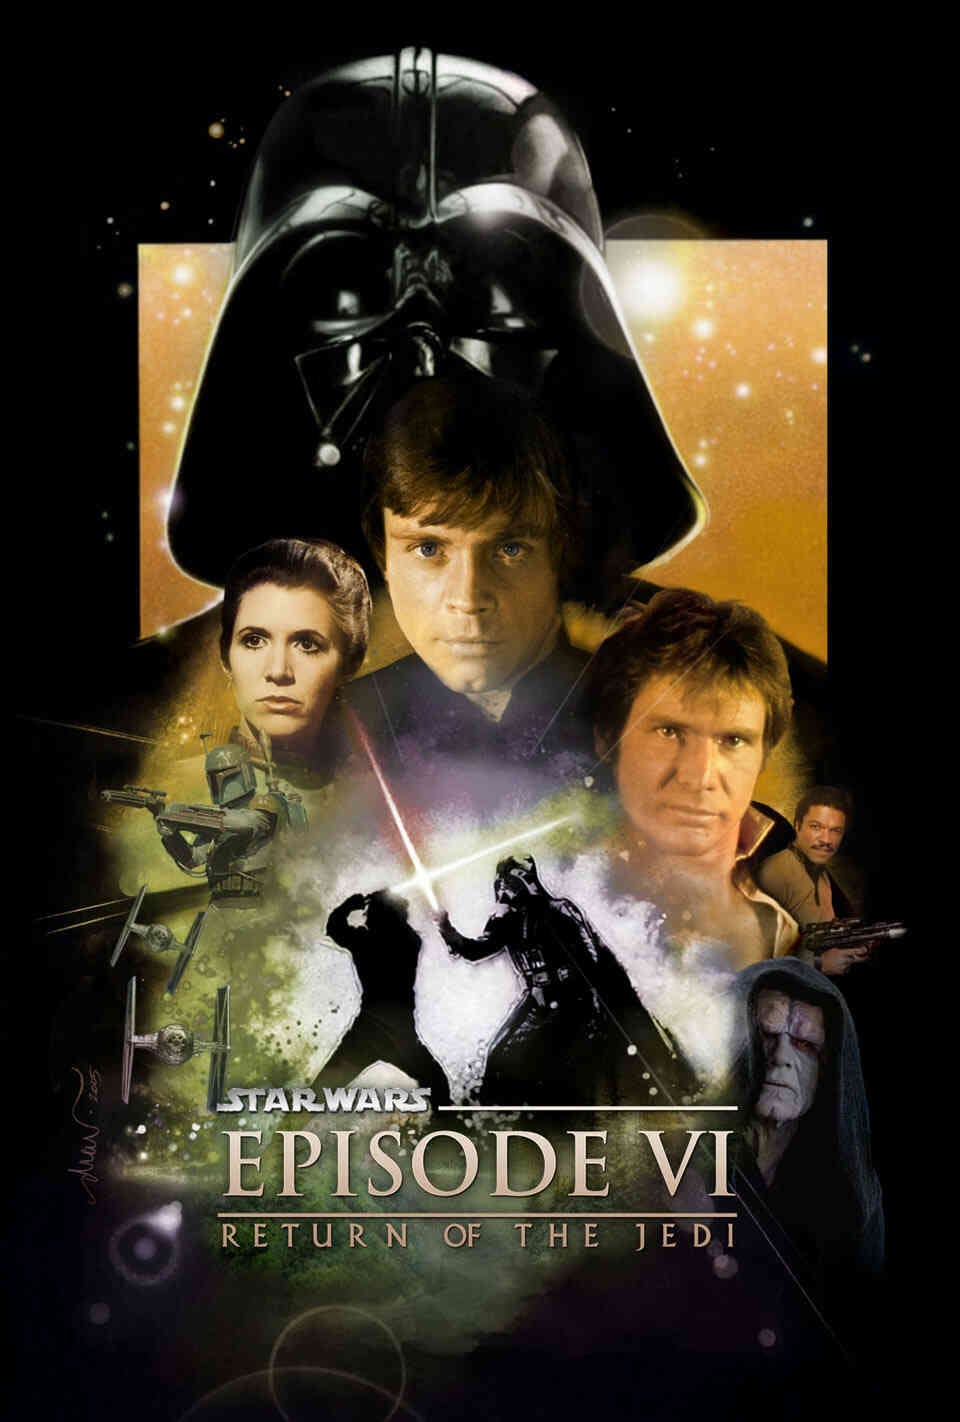 Read Episode VI - Return of the Jedi screenplay (poster)